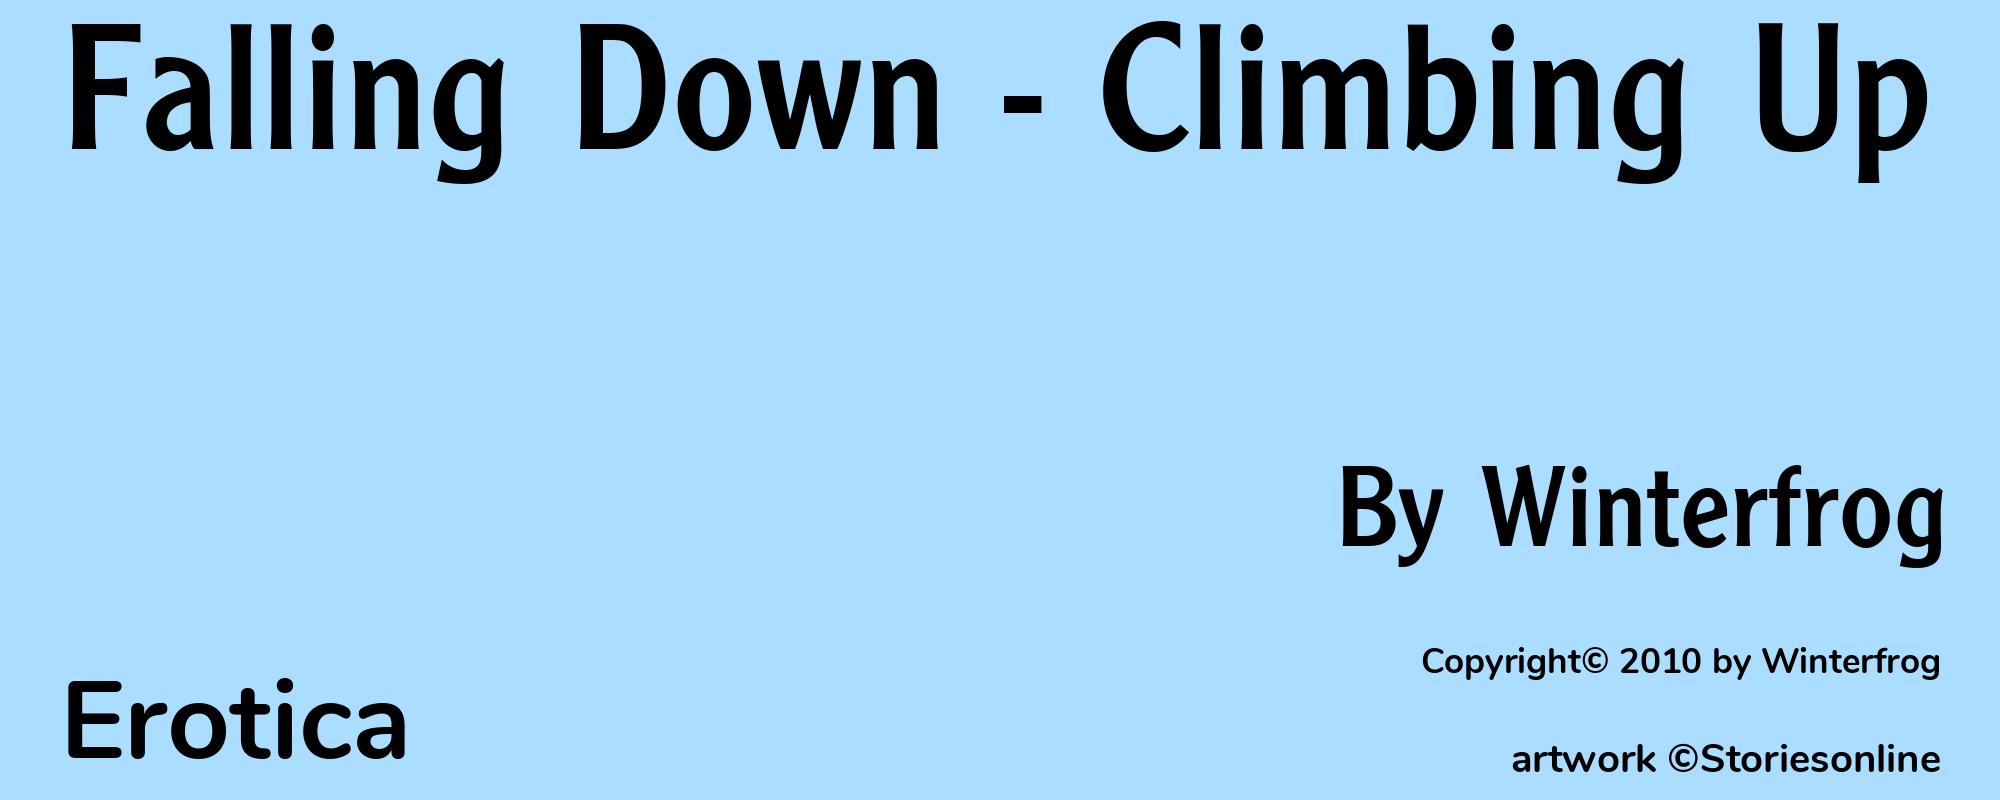 Falling Down - Climbing Up - Cover